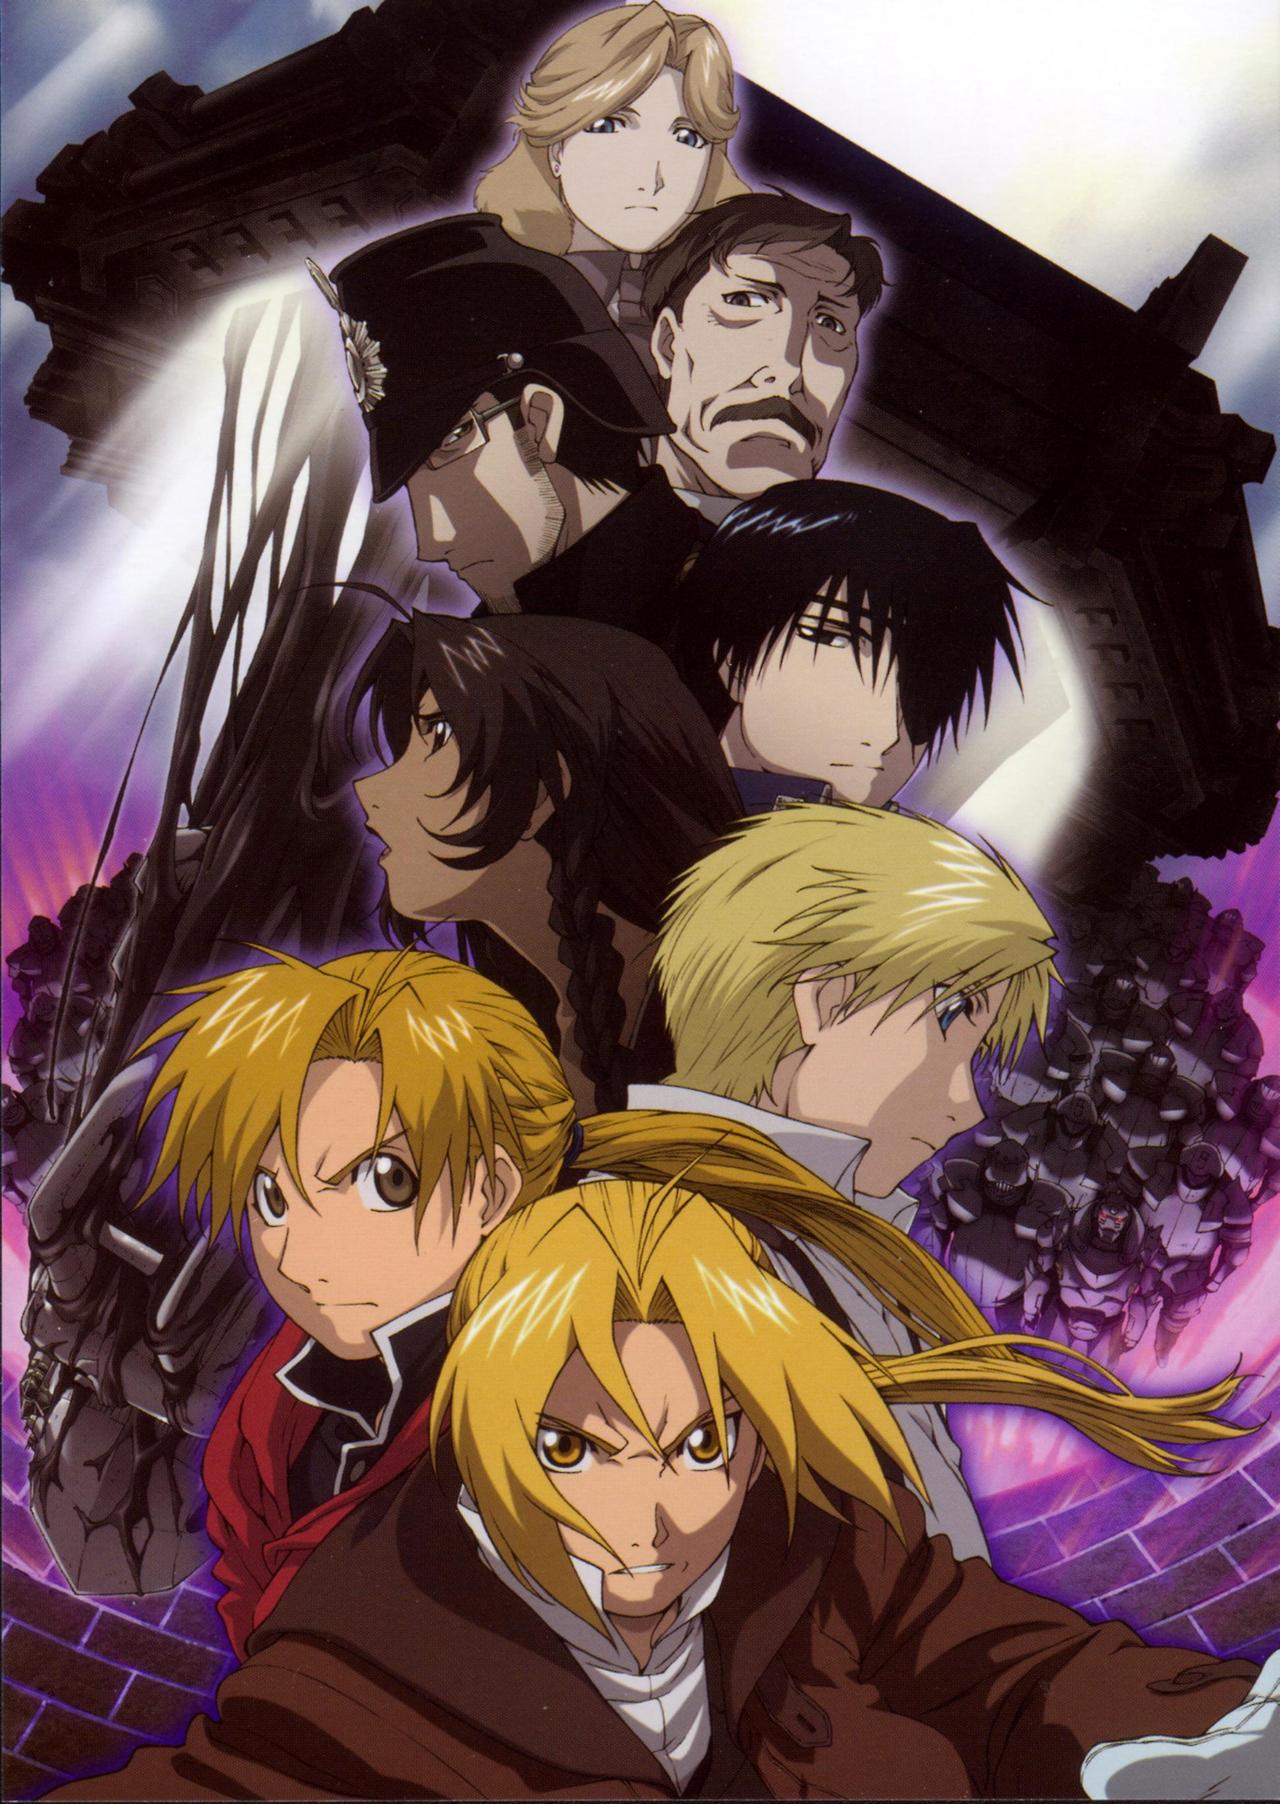 Anime Review: Fullmetal Alchemist (2003)